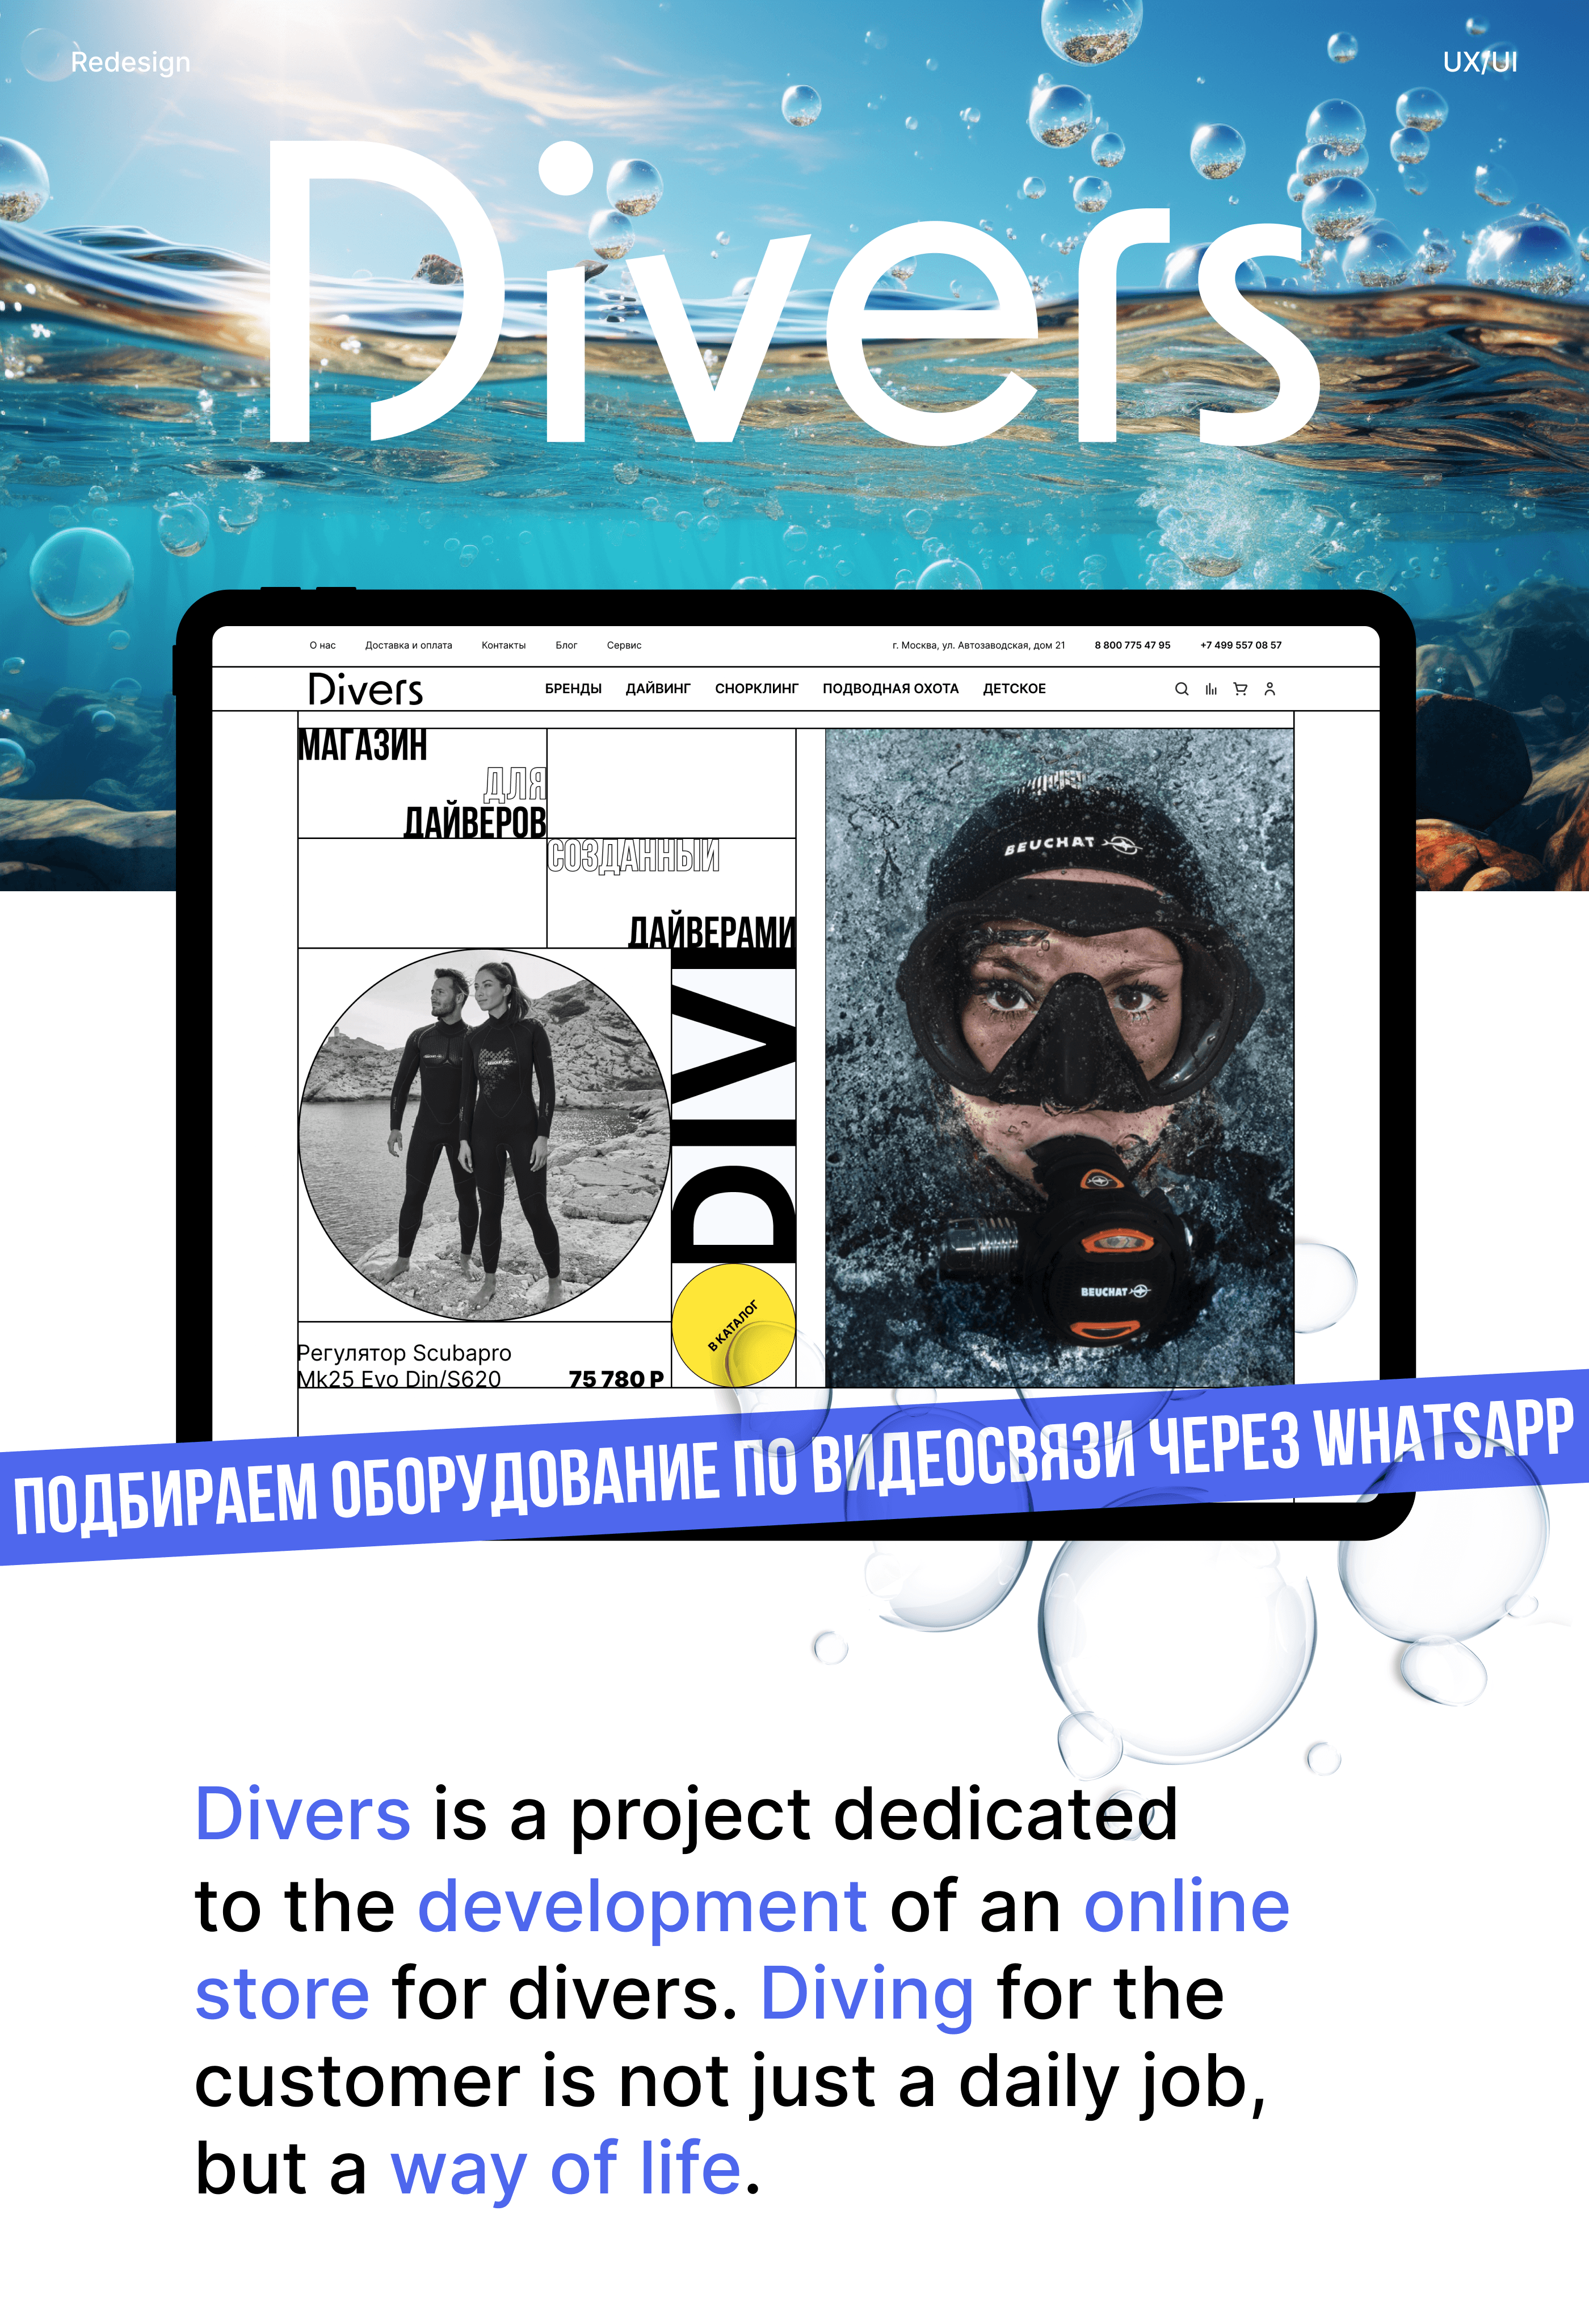 Divers.ru website — Изображение №1 — Интерфейсы на Dprofile